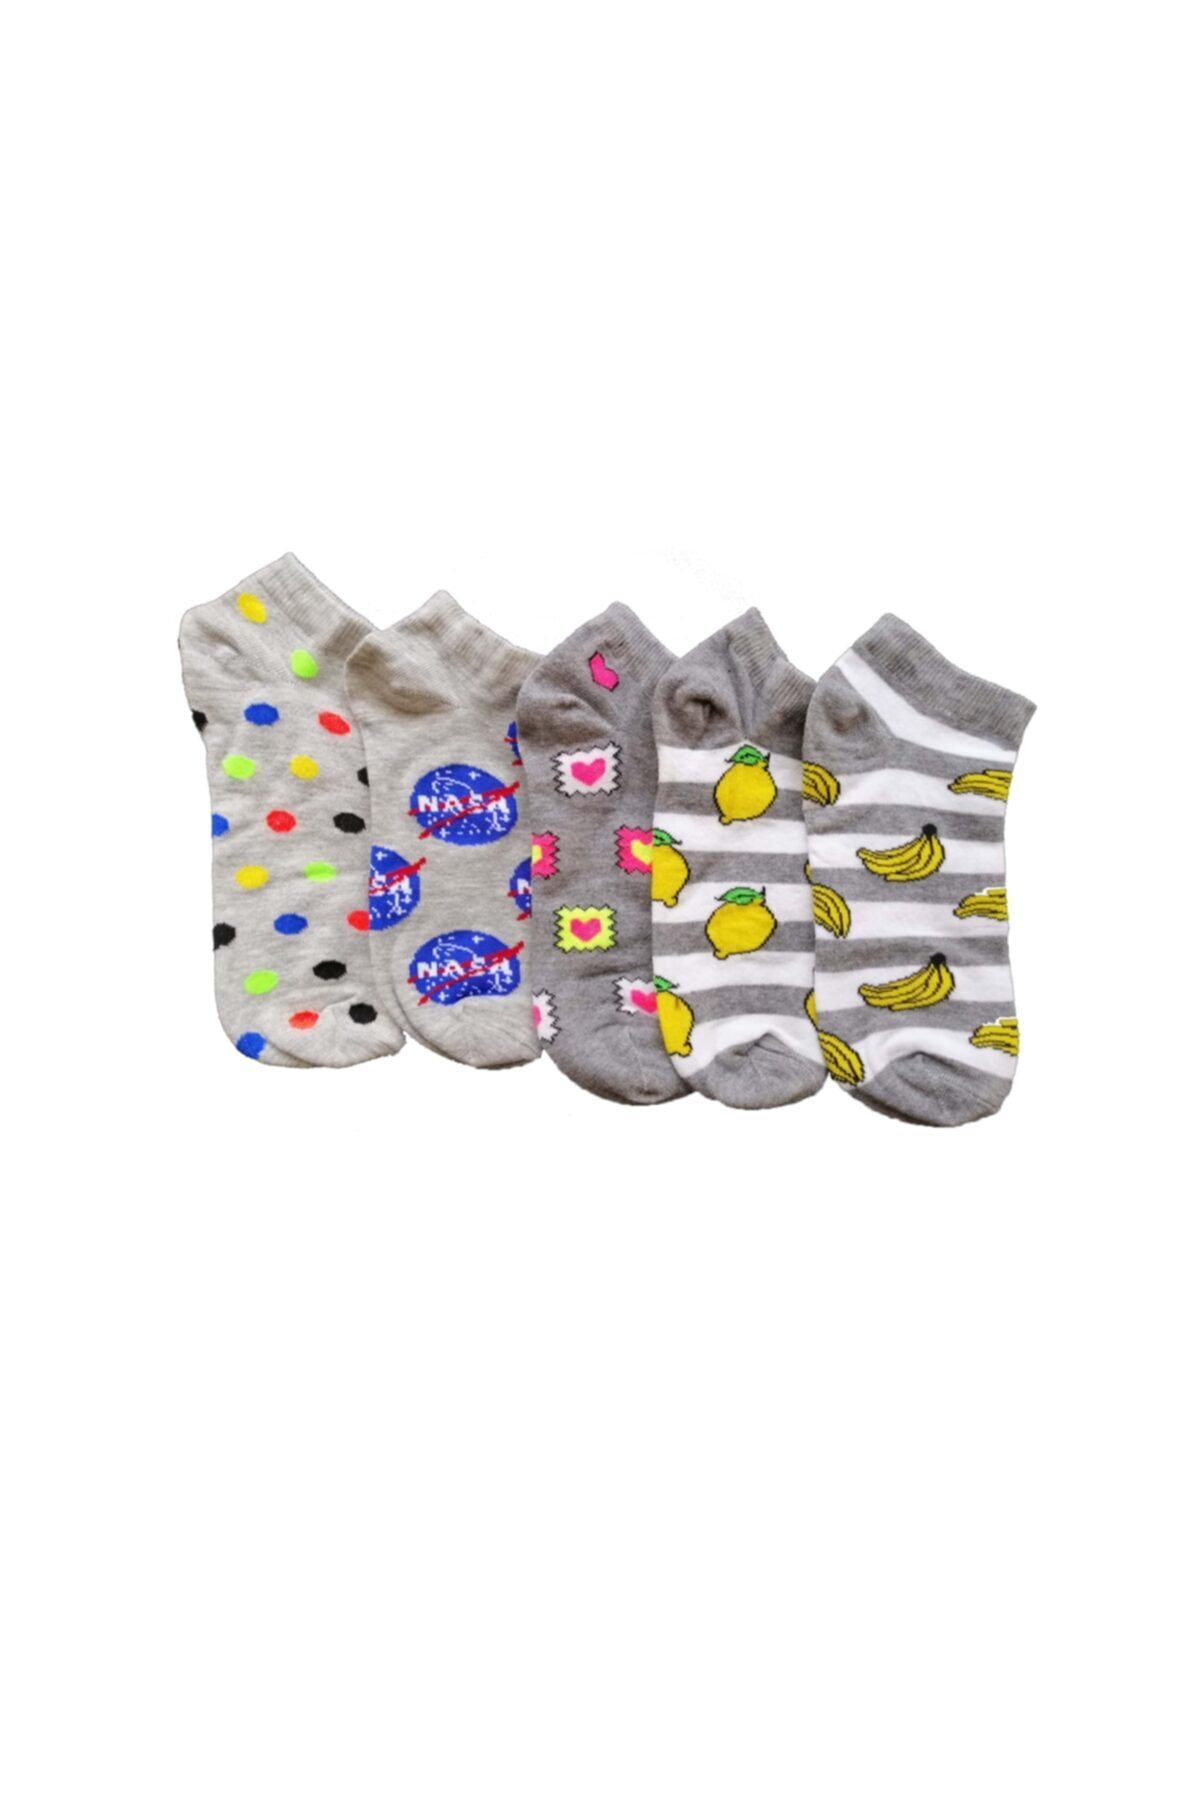 Altıgen socks 5 Çift Kadın Renkli Kalp-limon-muz-nasa-renkli Top Patik Çorap Set